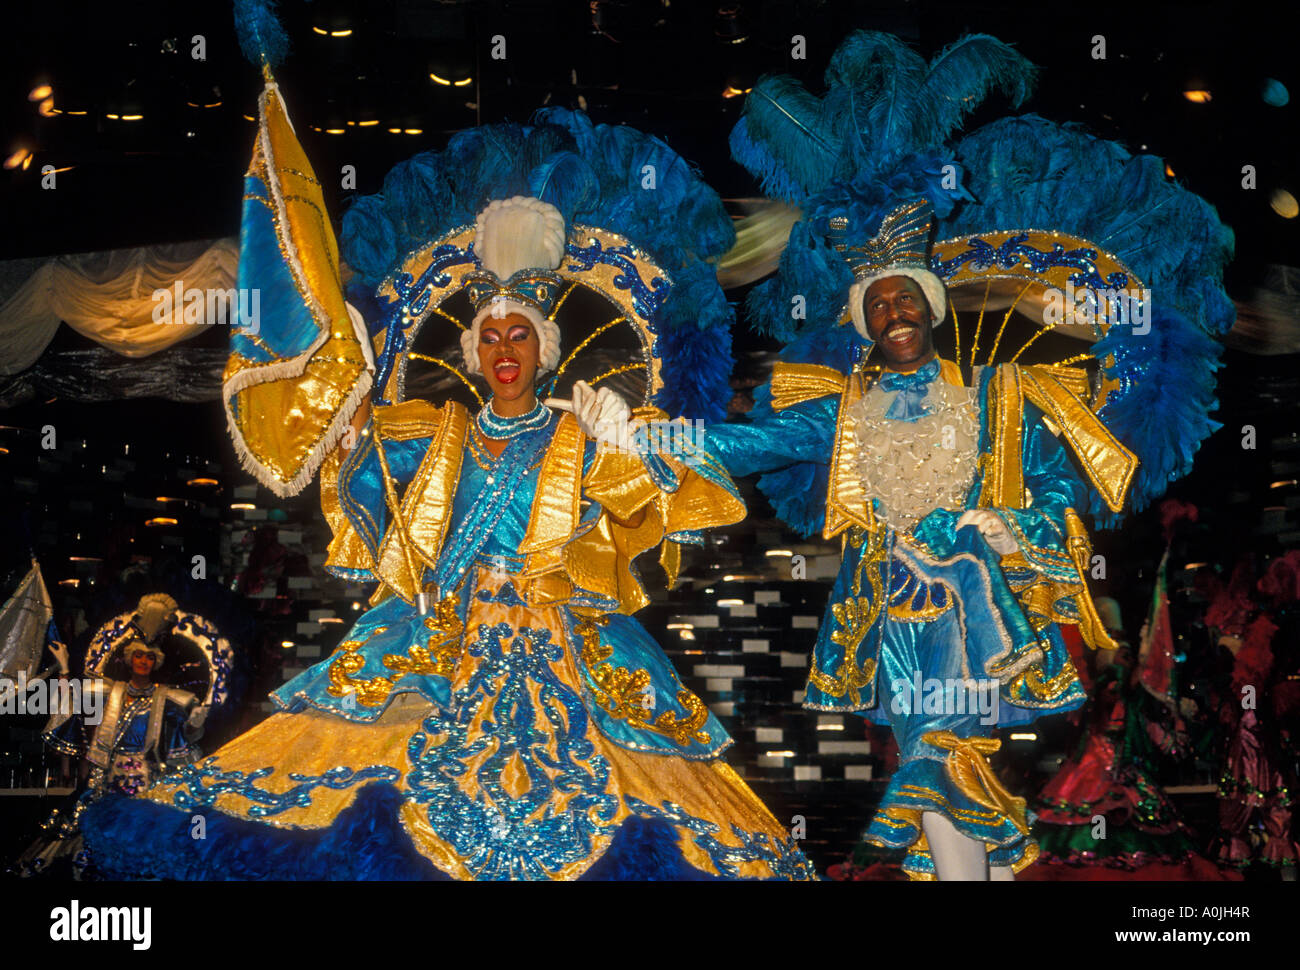 Brazilian woman, Brazilian man, dancers, carnival costume, nightclub performance, Rio de Janeiro, Rio de Janeiro State, Brazil, South America Stock Photo